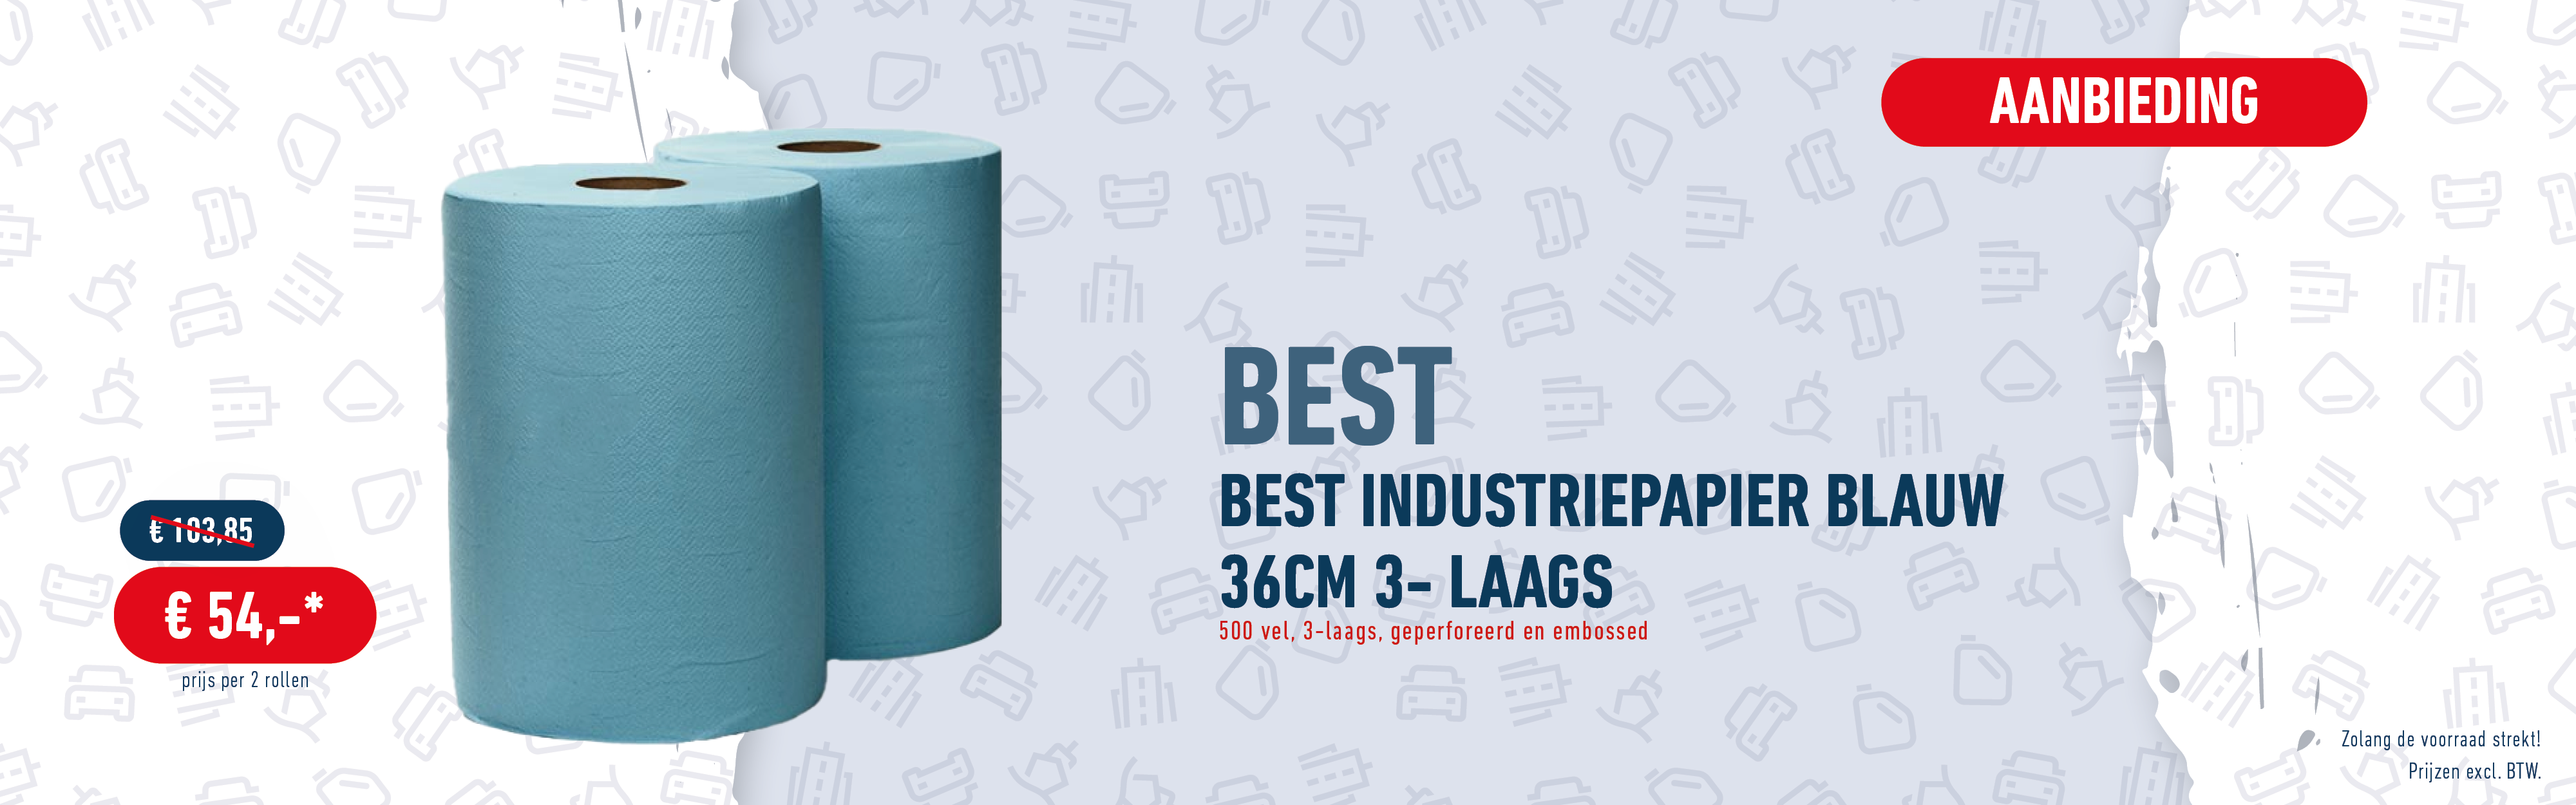 Best Industriepapier Blauw 36cm x 180m